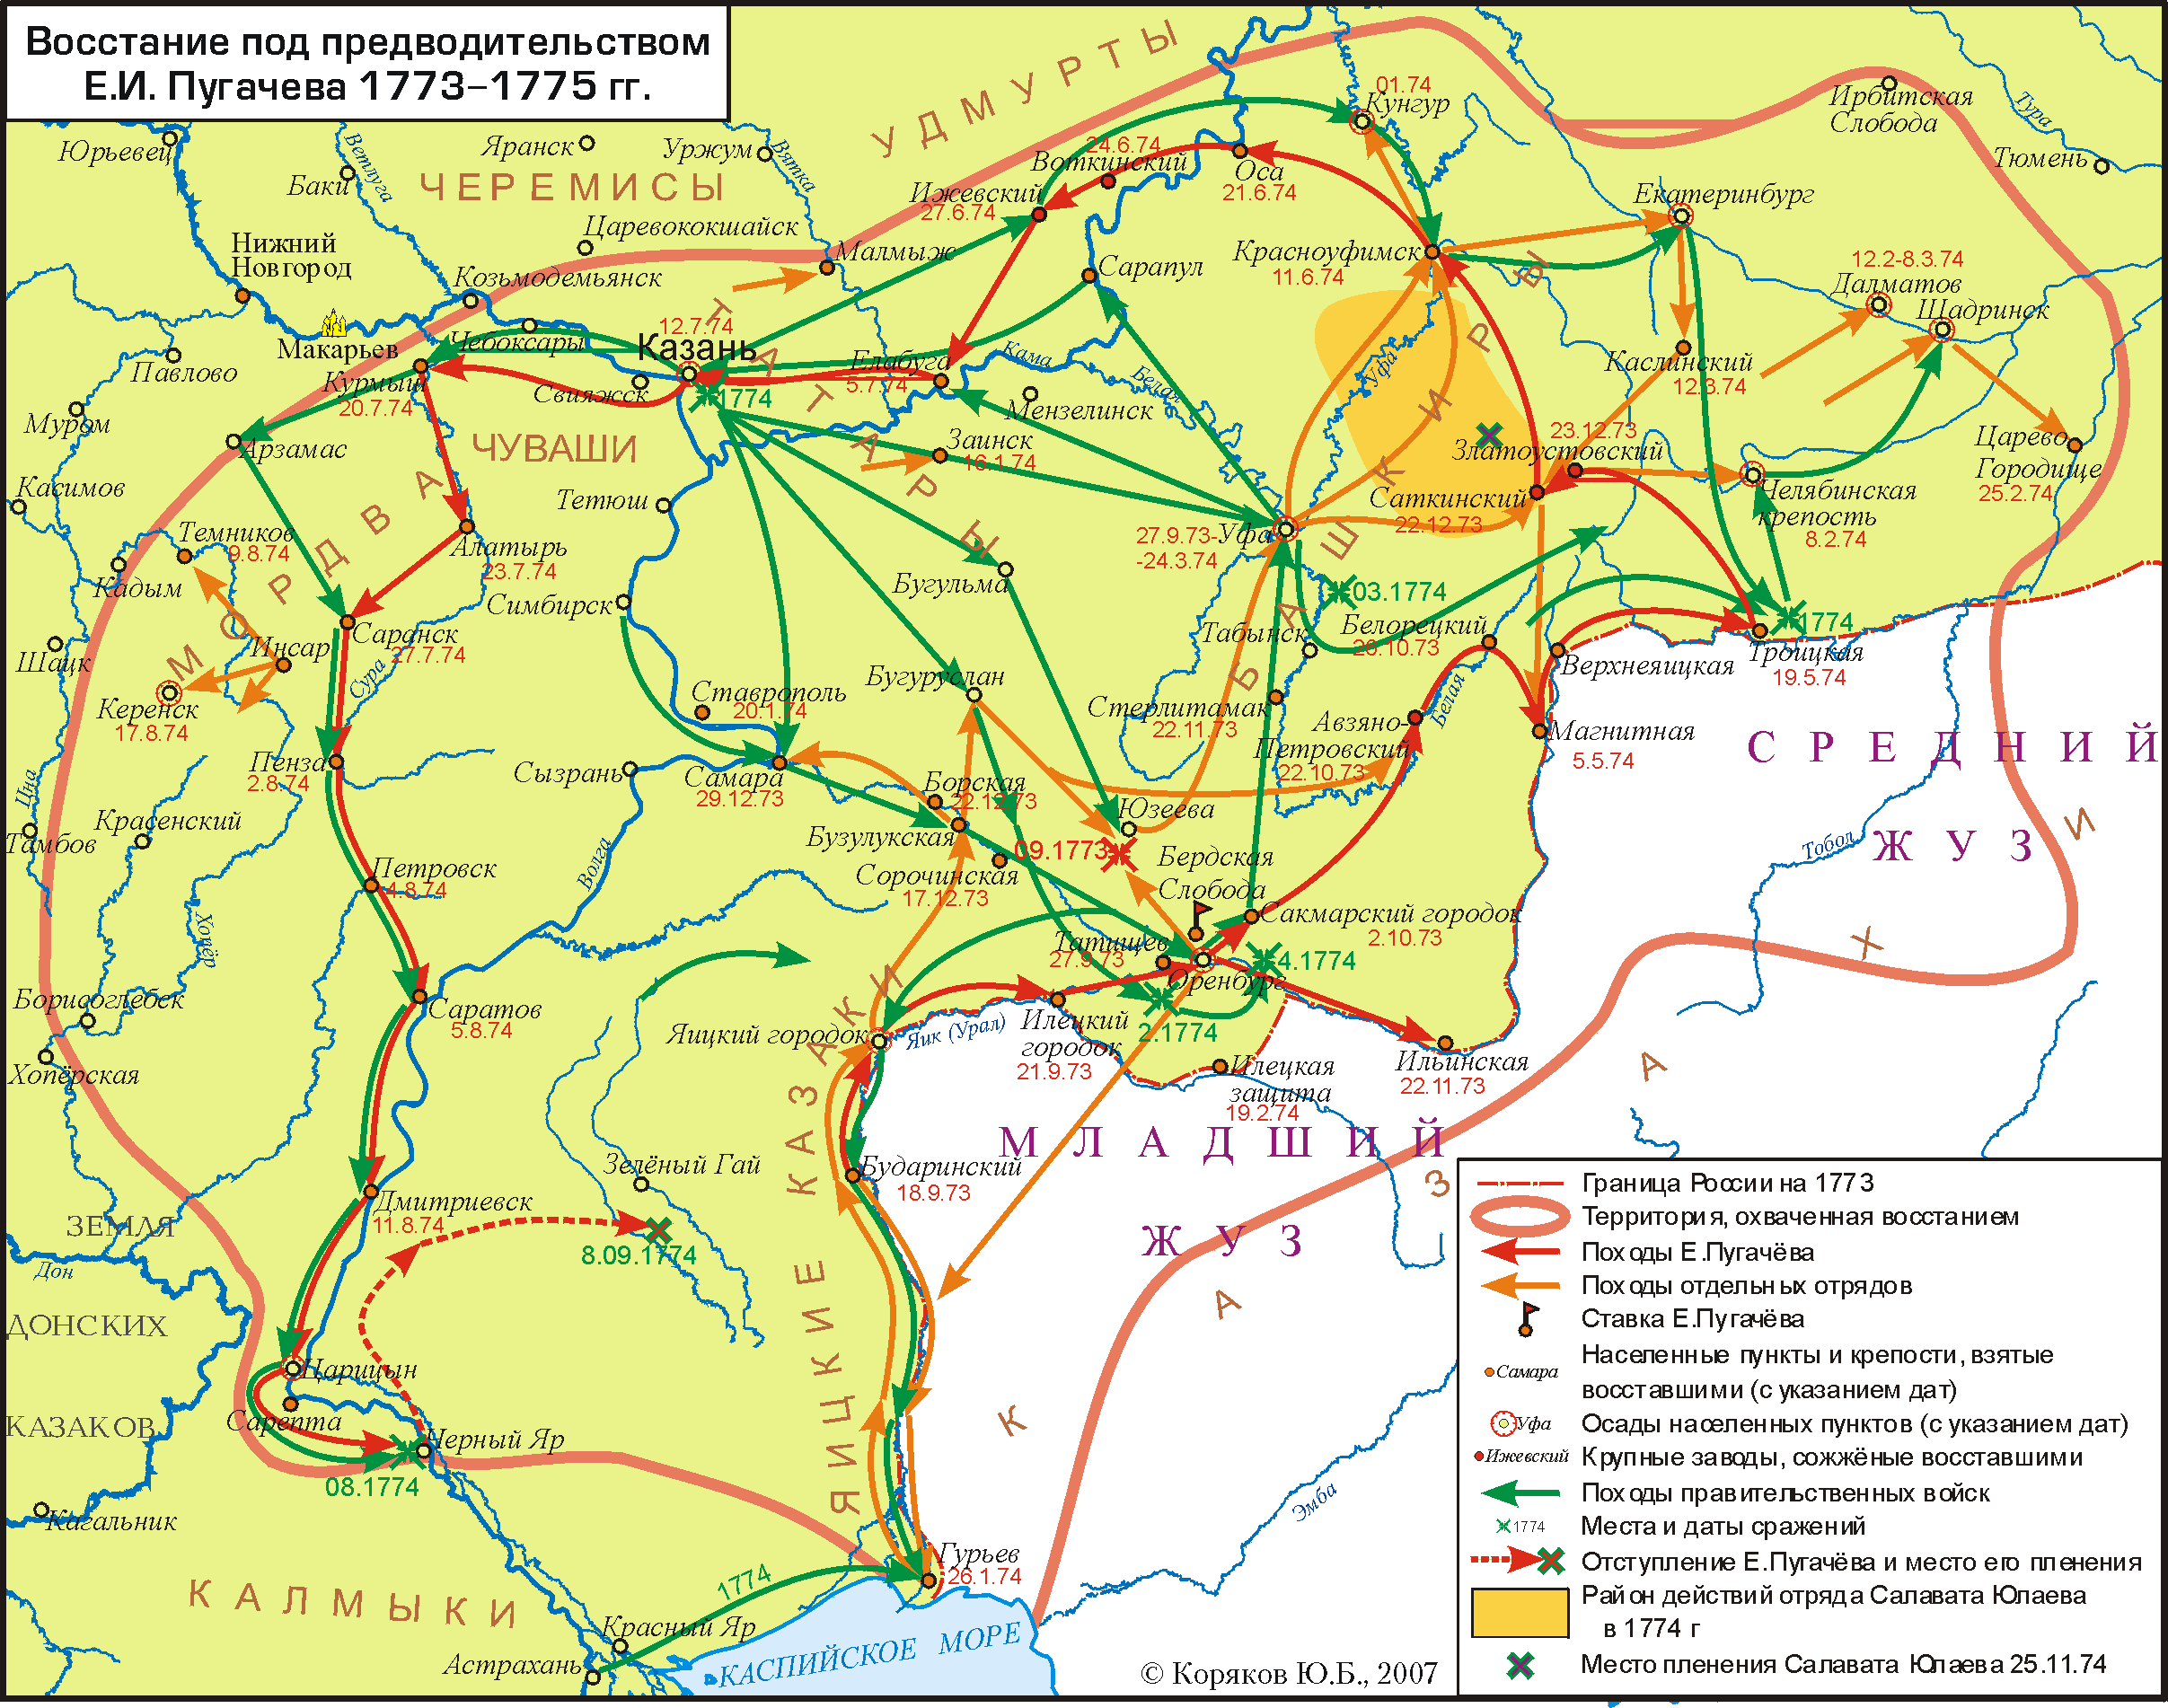 Map of Pugachev's rampage 1773-1775.